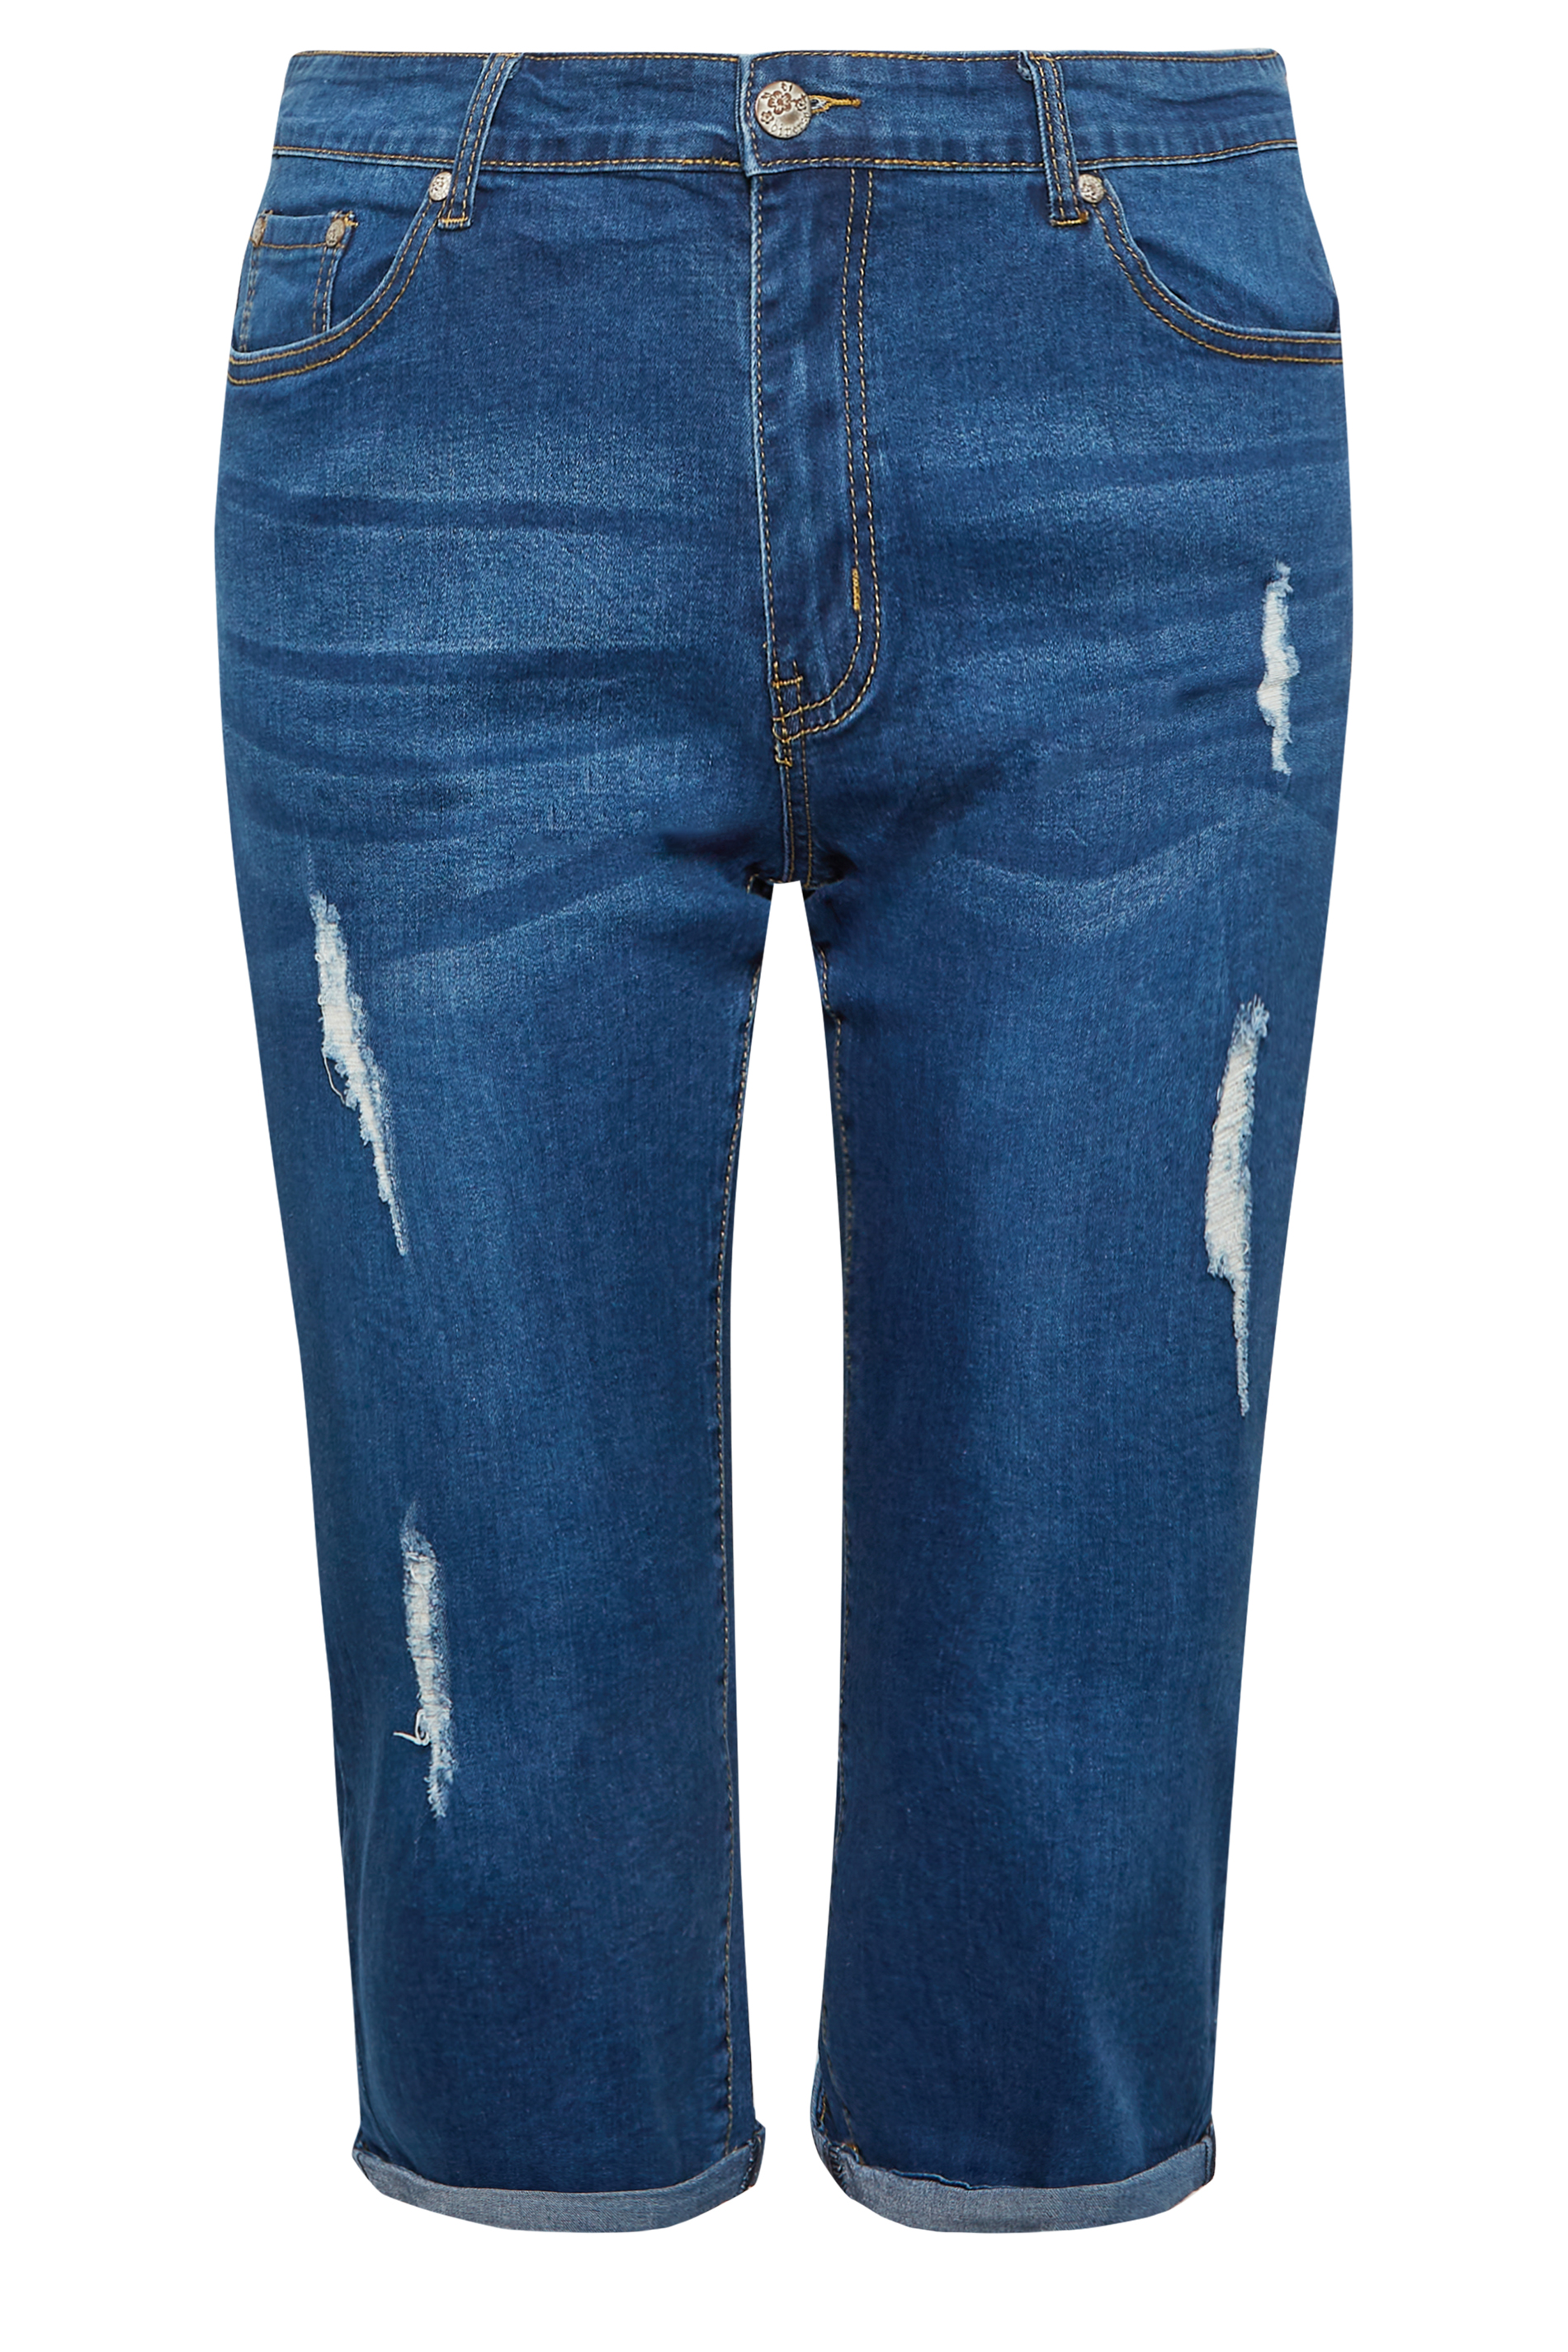 Womens Black or Blue Denim Distressed Capri-Jeans Size 10,12,14,16,18,20,22  NWT!